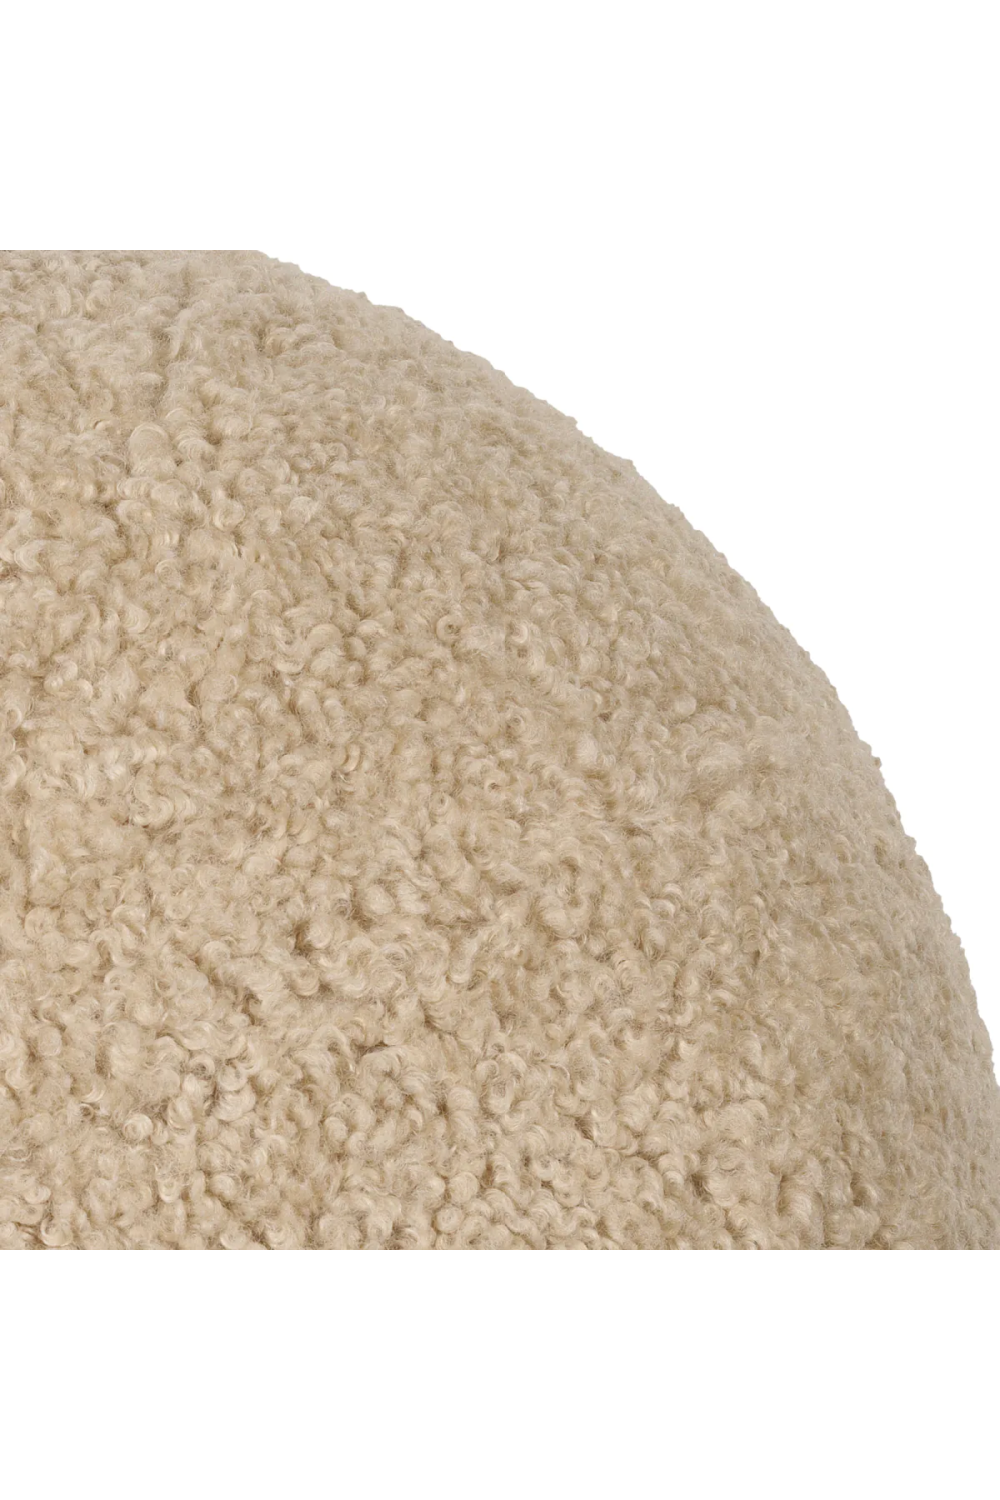 Canberra Sand Ball Pillow | Eichholtz Palla L | OROA.com